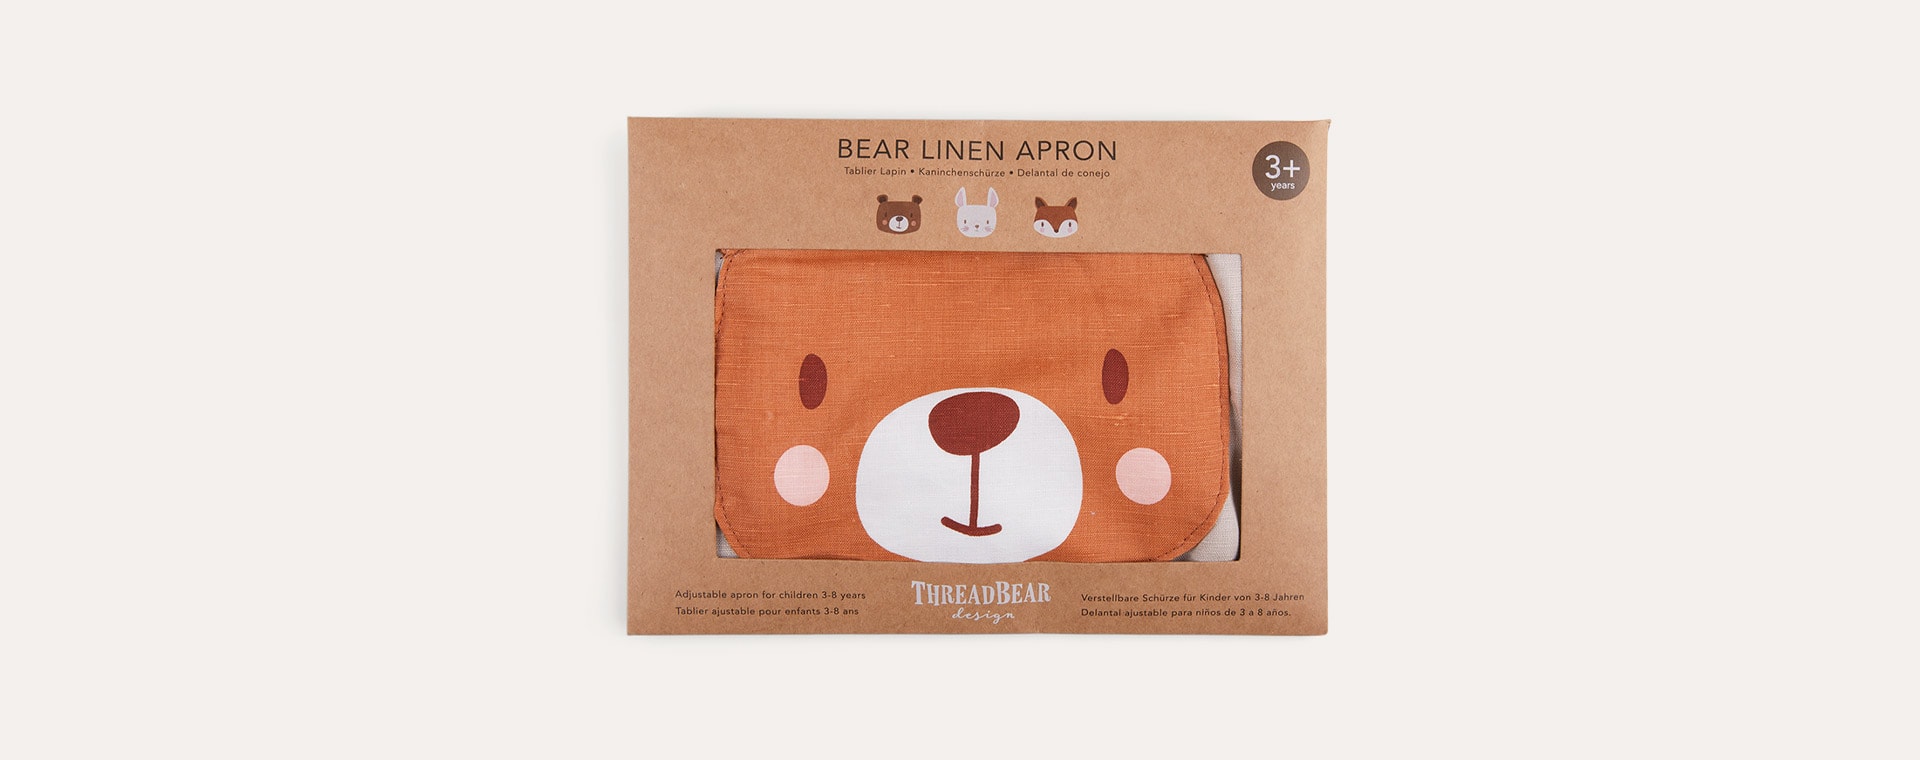 Natural ThreadBear Bear Linen Apron